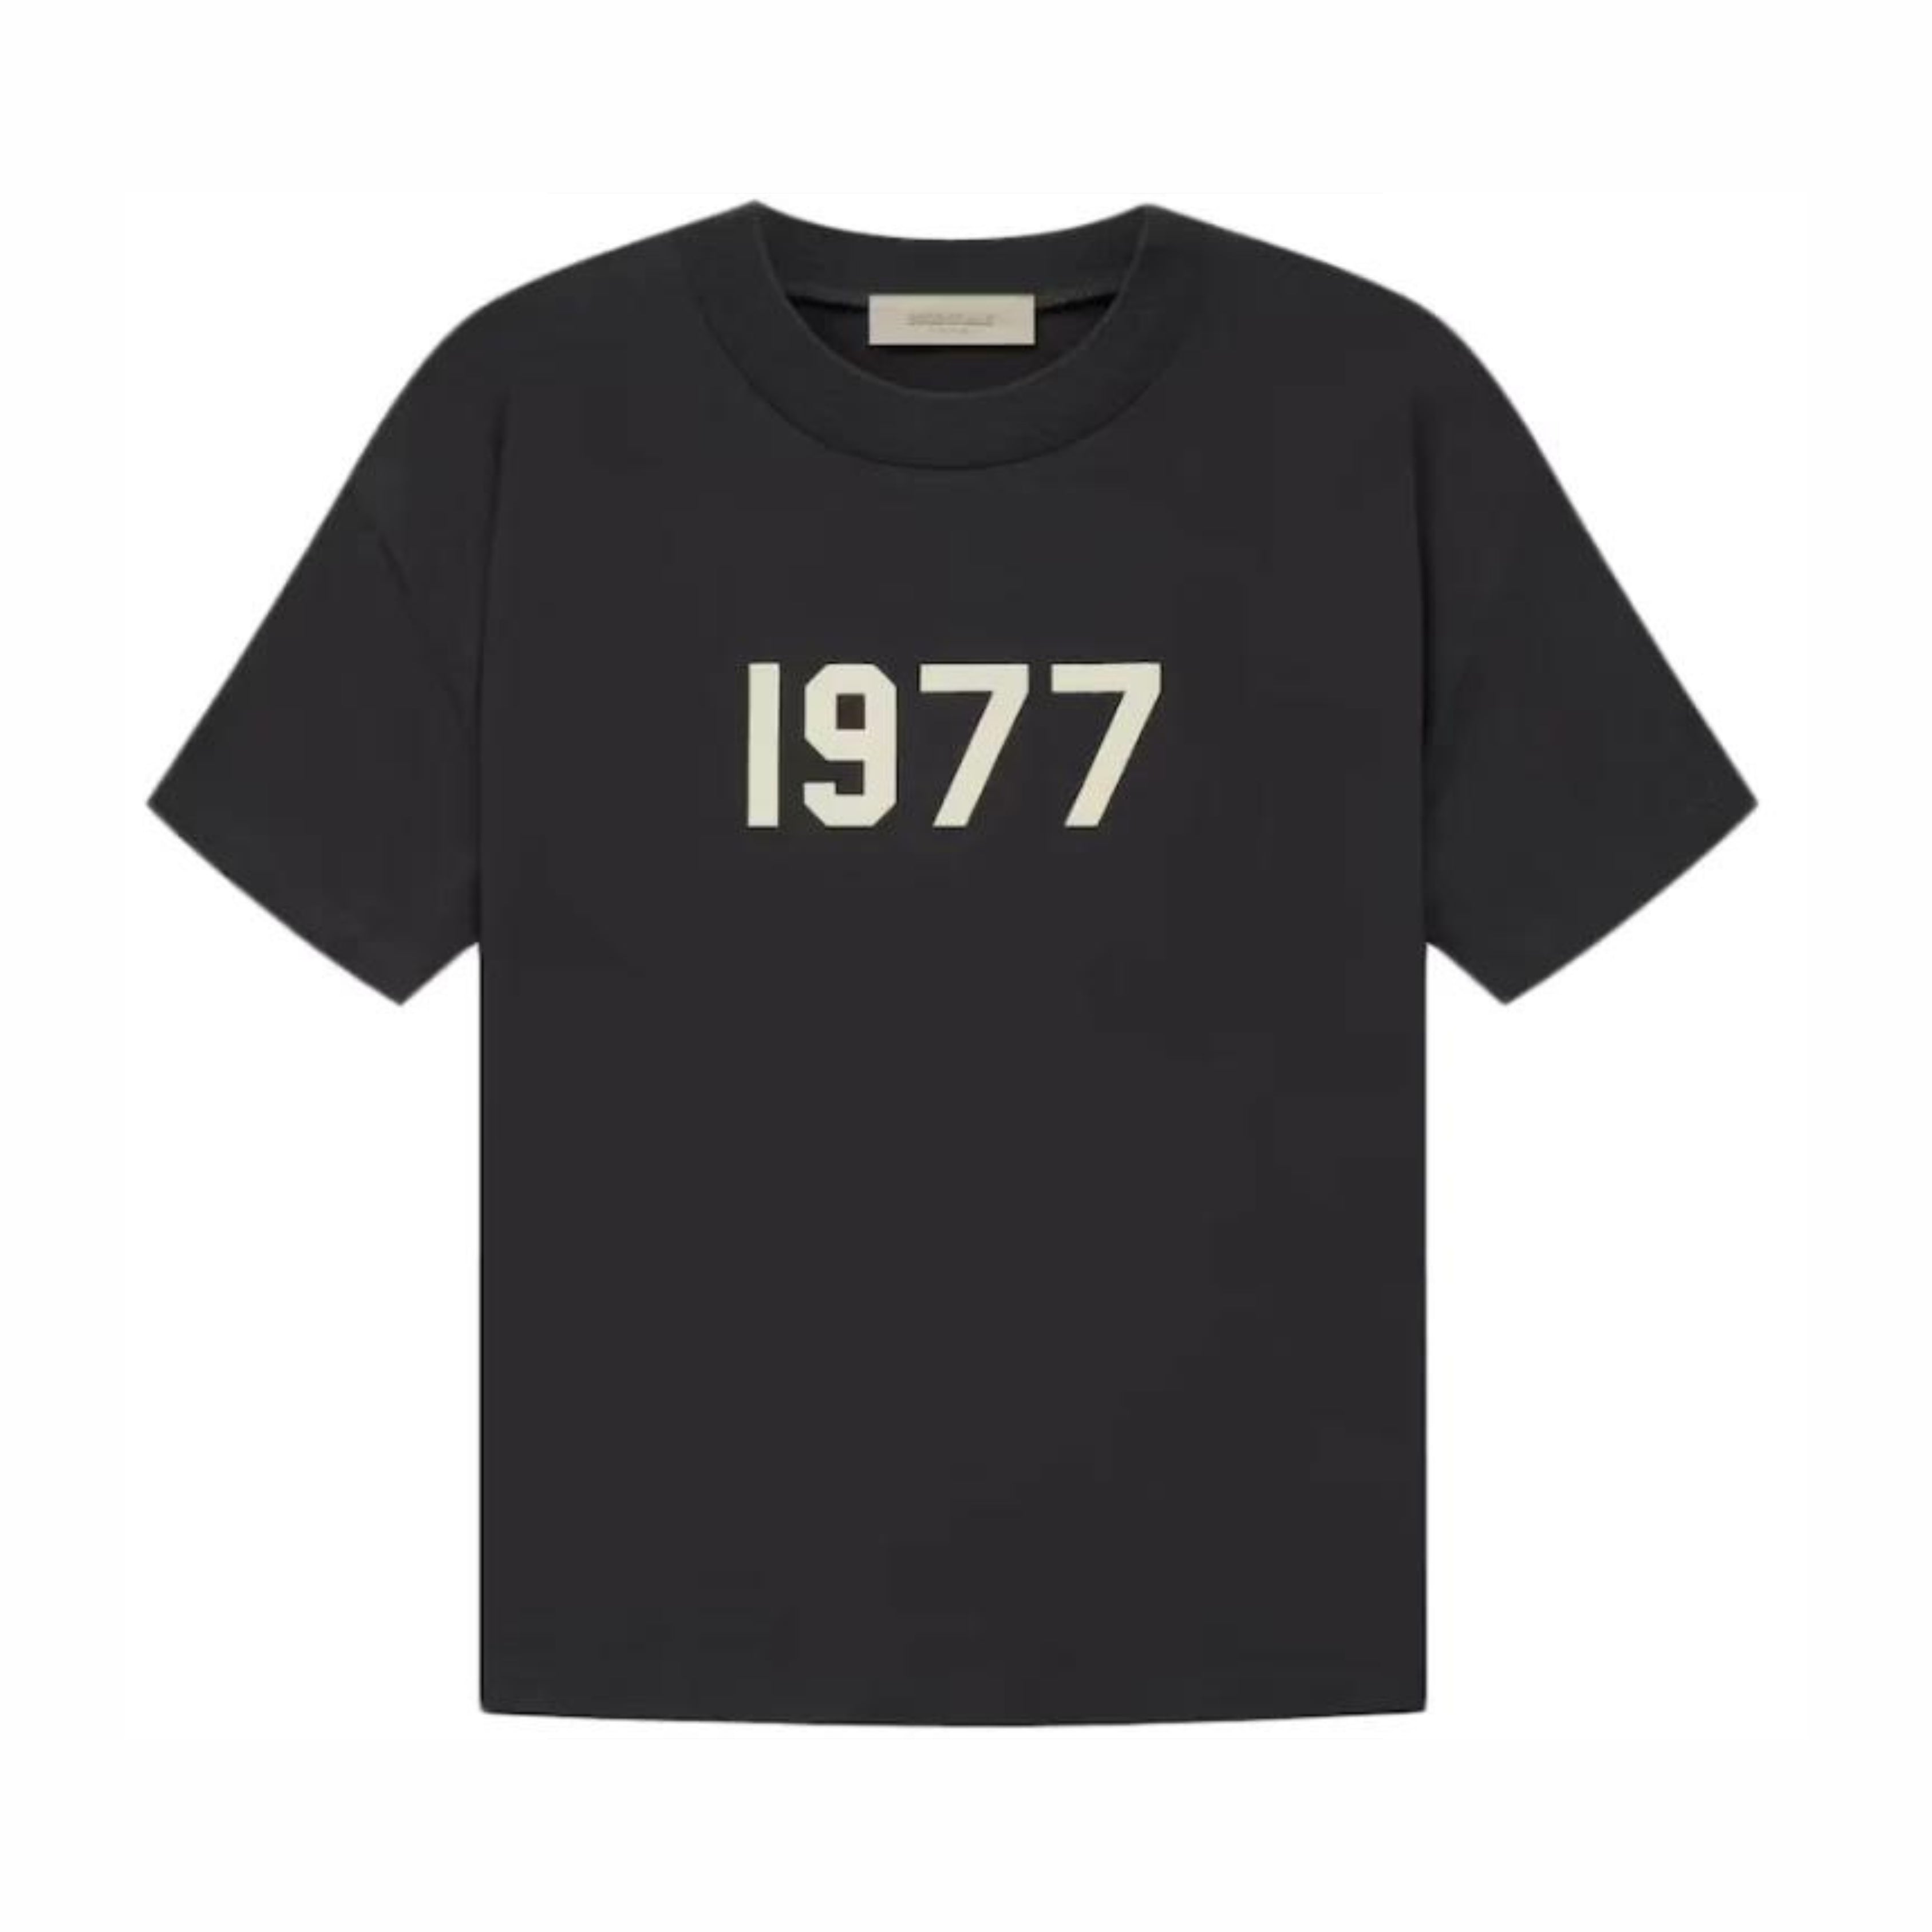 Nike Fear of God Essentials 1977 T-shirt Iron